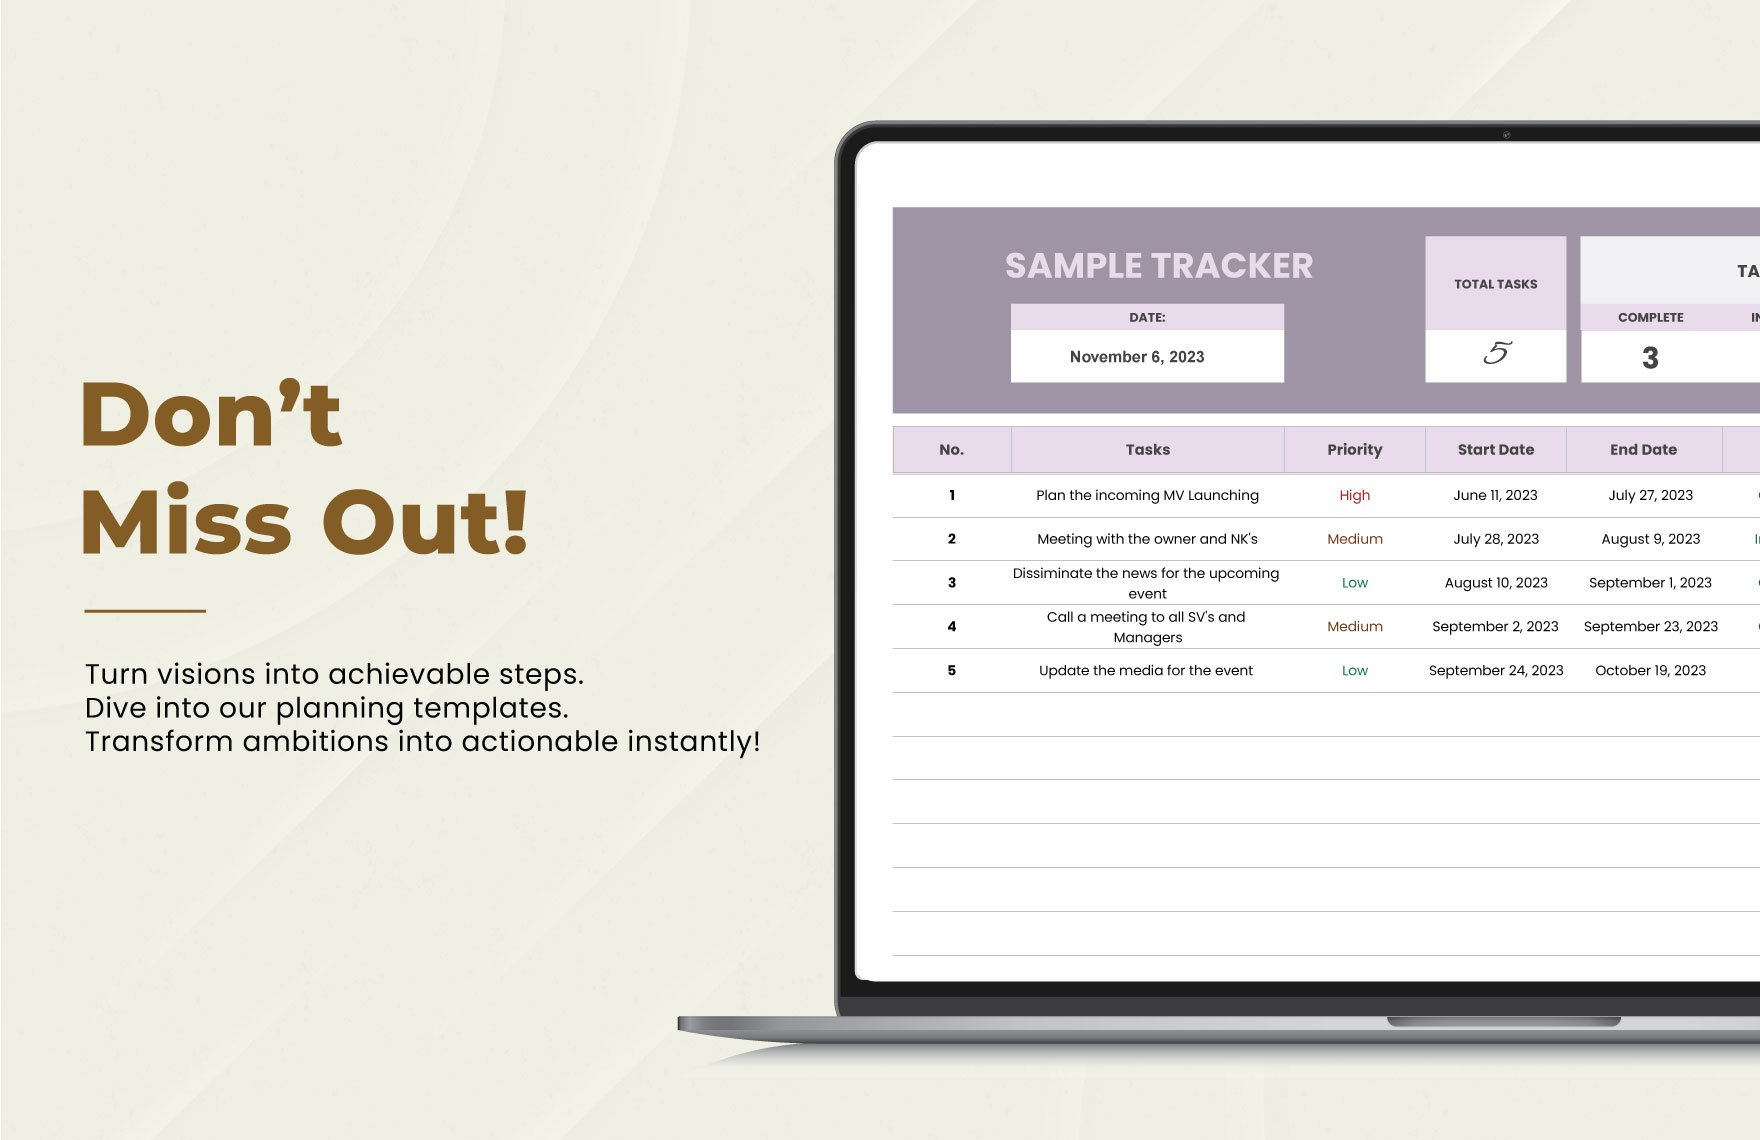 Sample Tracker Template